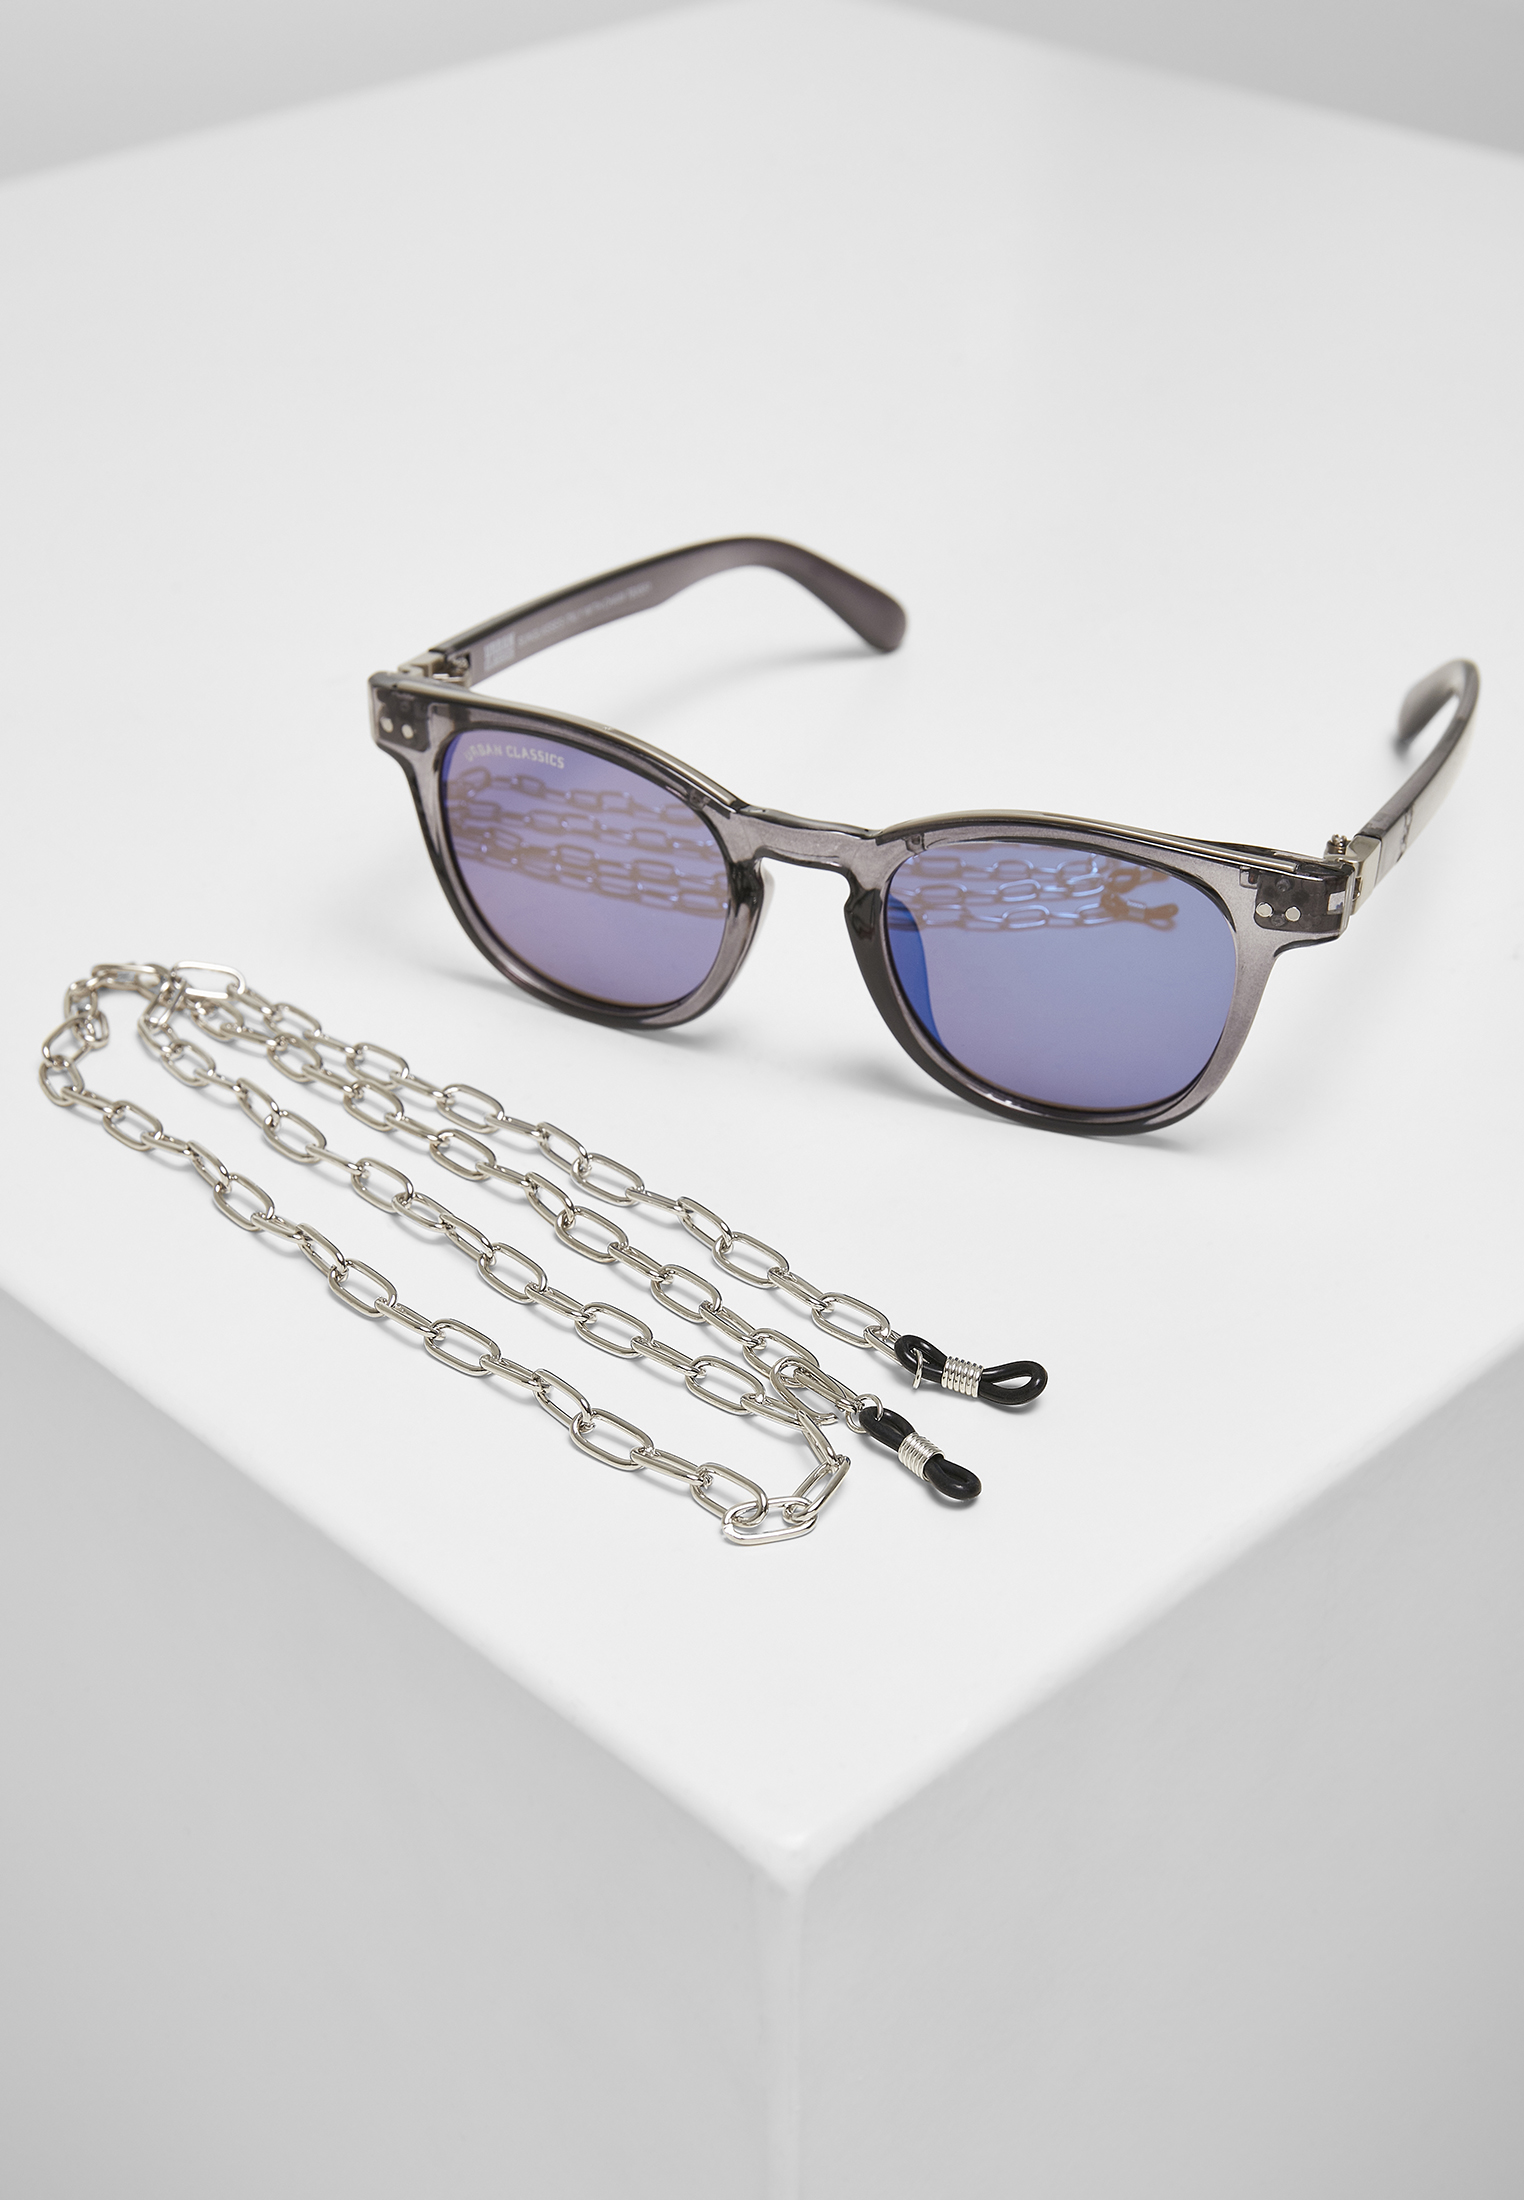 Sonnenbrillen Sunglasses Italy with chain in Farbe grey/silver/silver